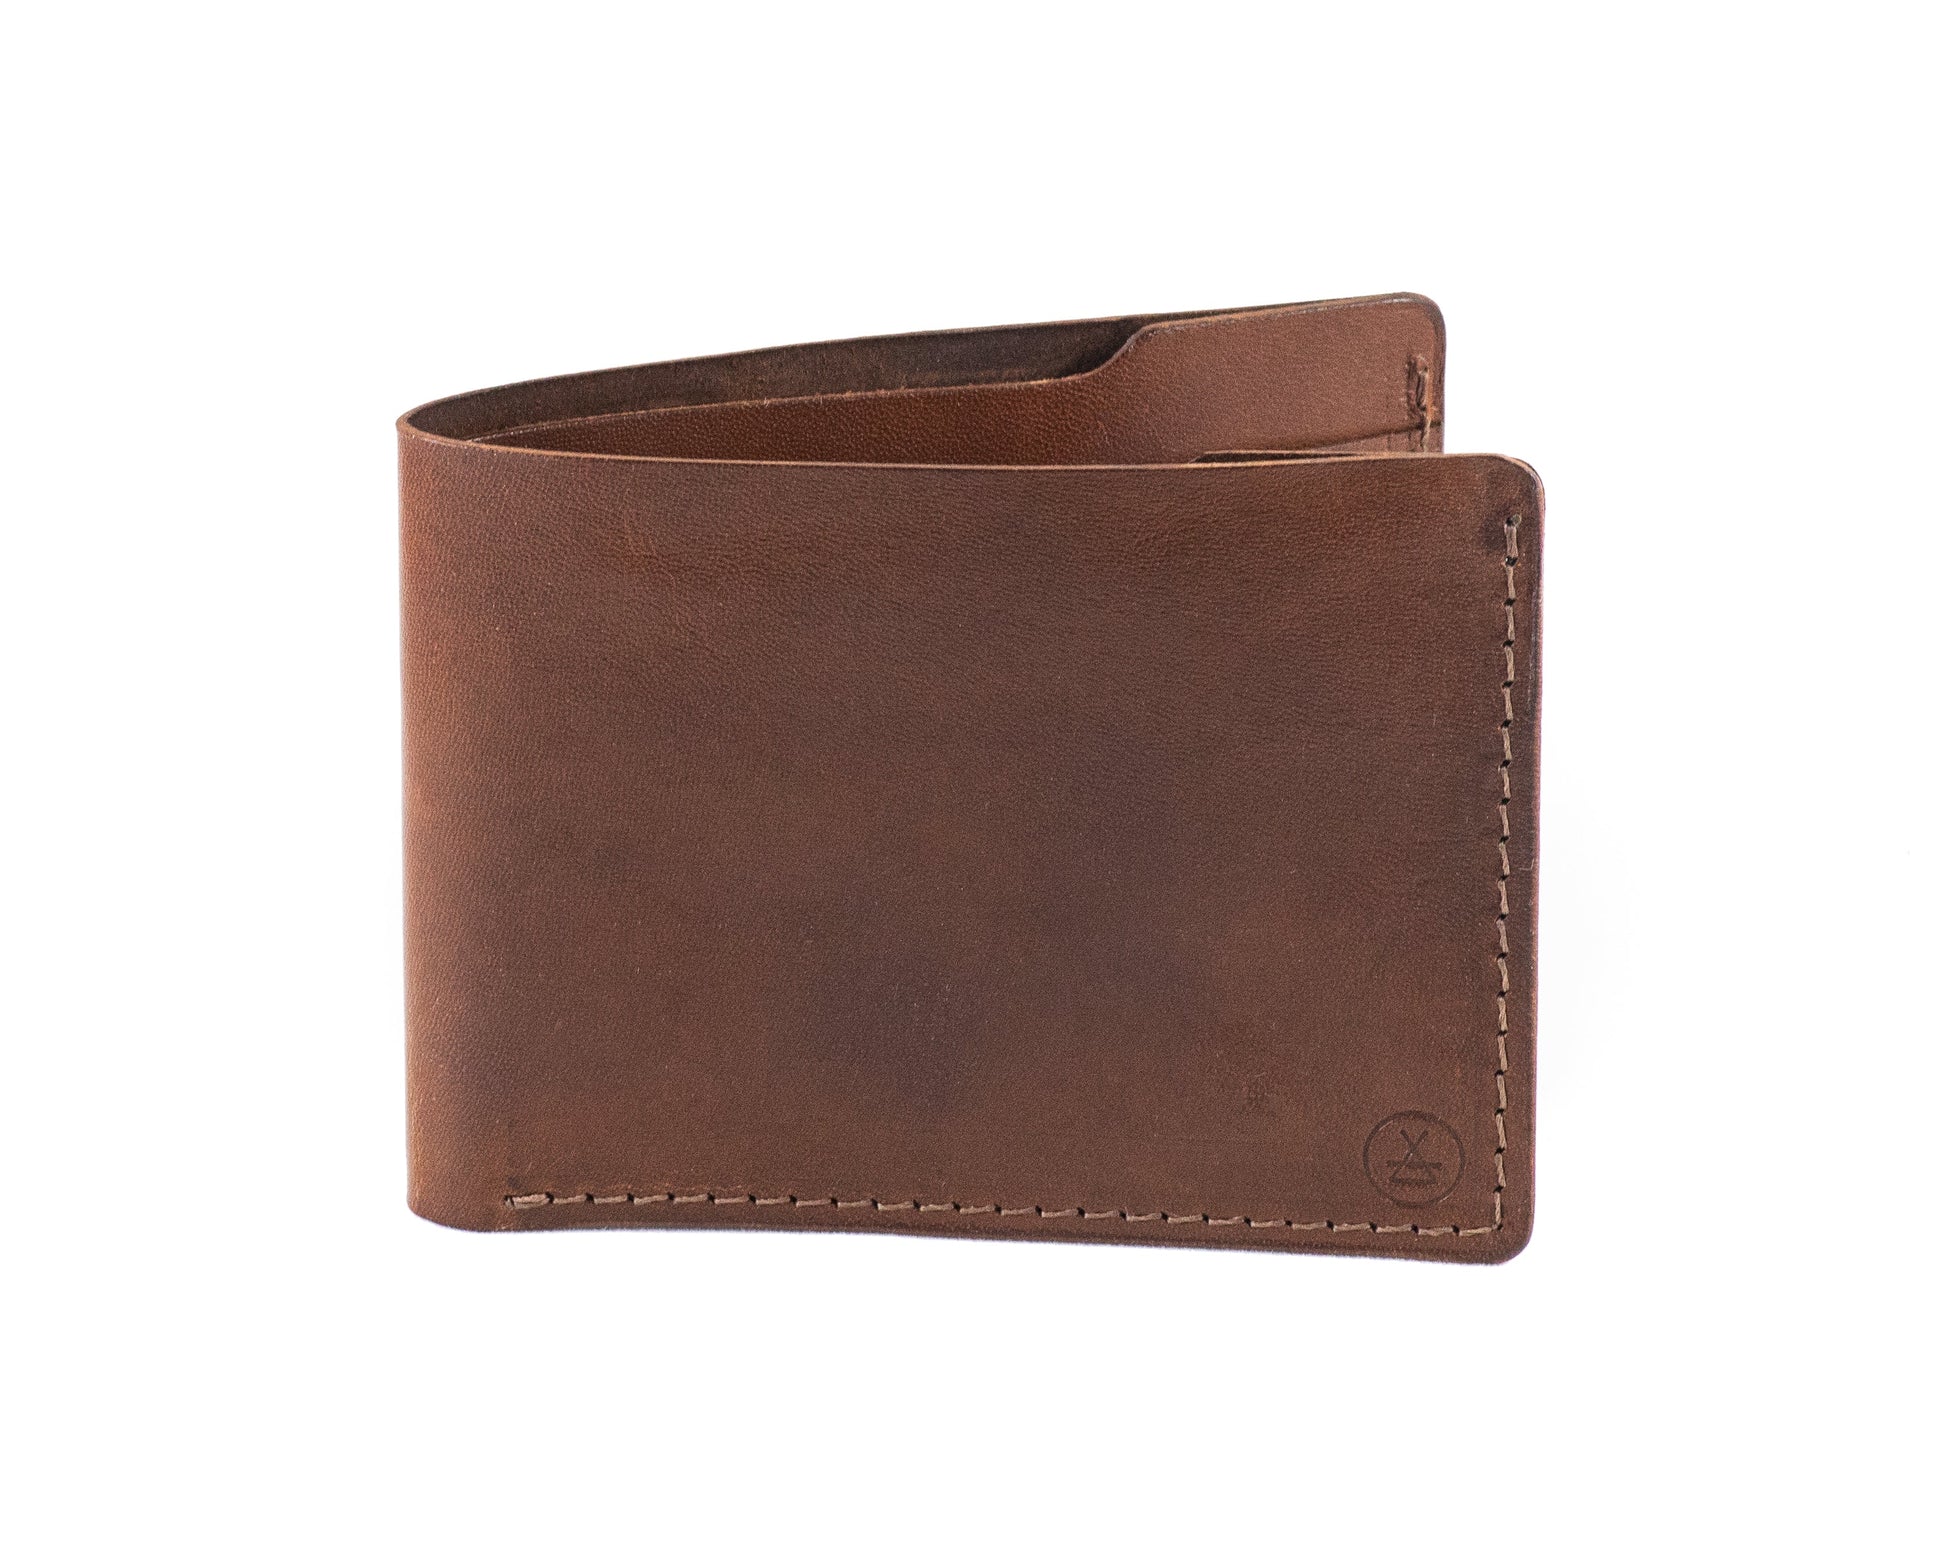 Classic bifold slim wallet in whiskey Kangaroo leather - Kohutt™ - made in Tasmania